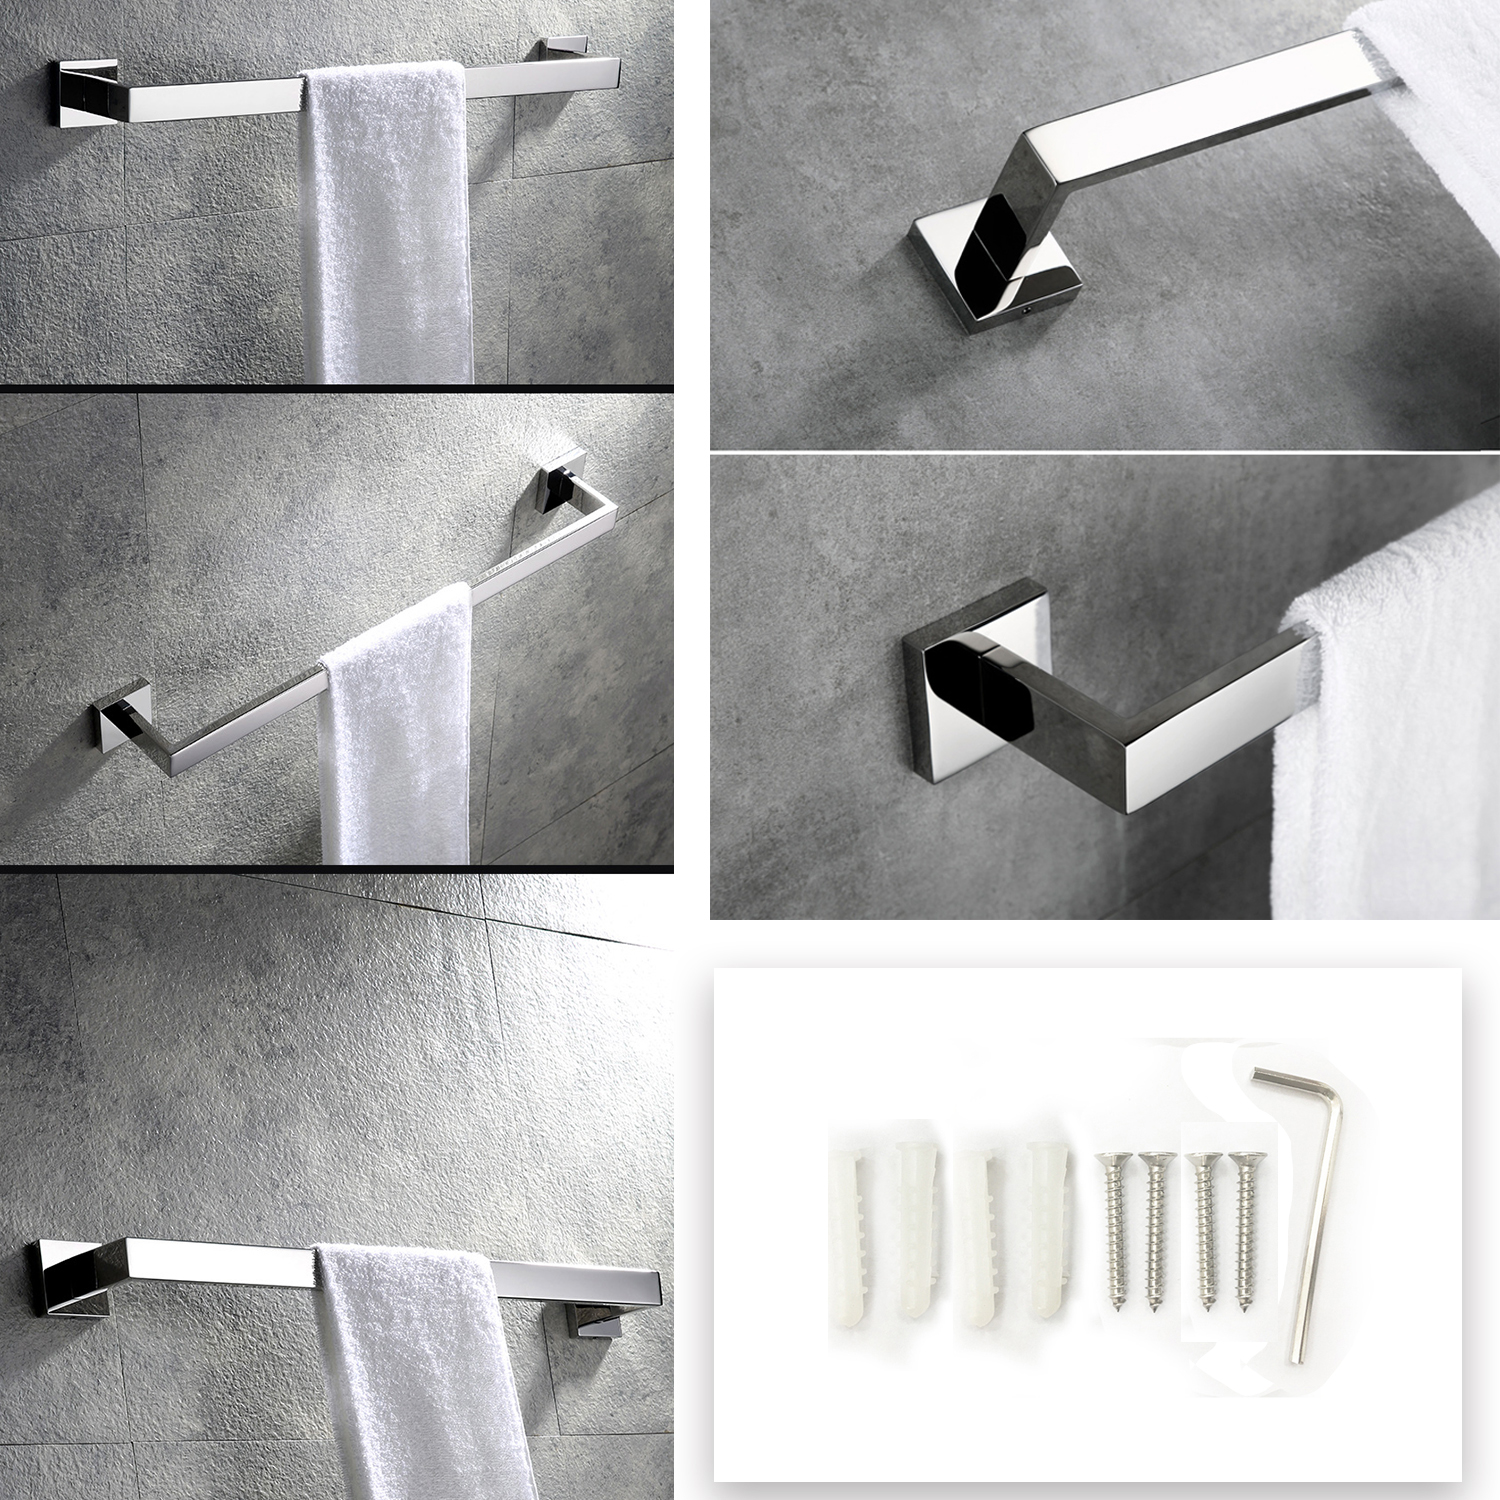 Bathroom Hardware Set Accessories 4-Piece Paper Towel Holder Towel Bar Set Towel Rack Robe Hook Bathroom Decor Stainless Steel